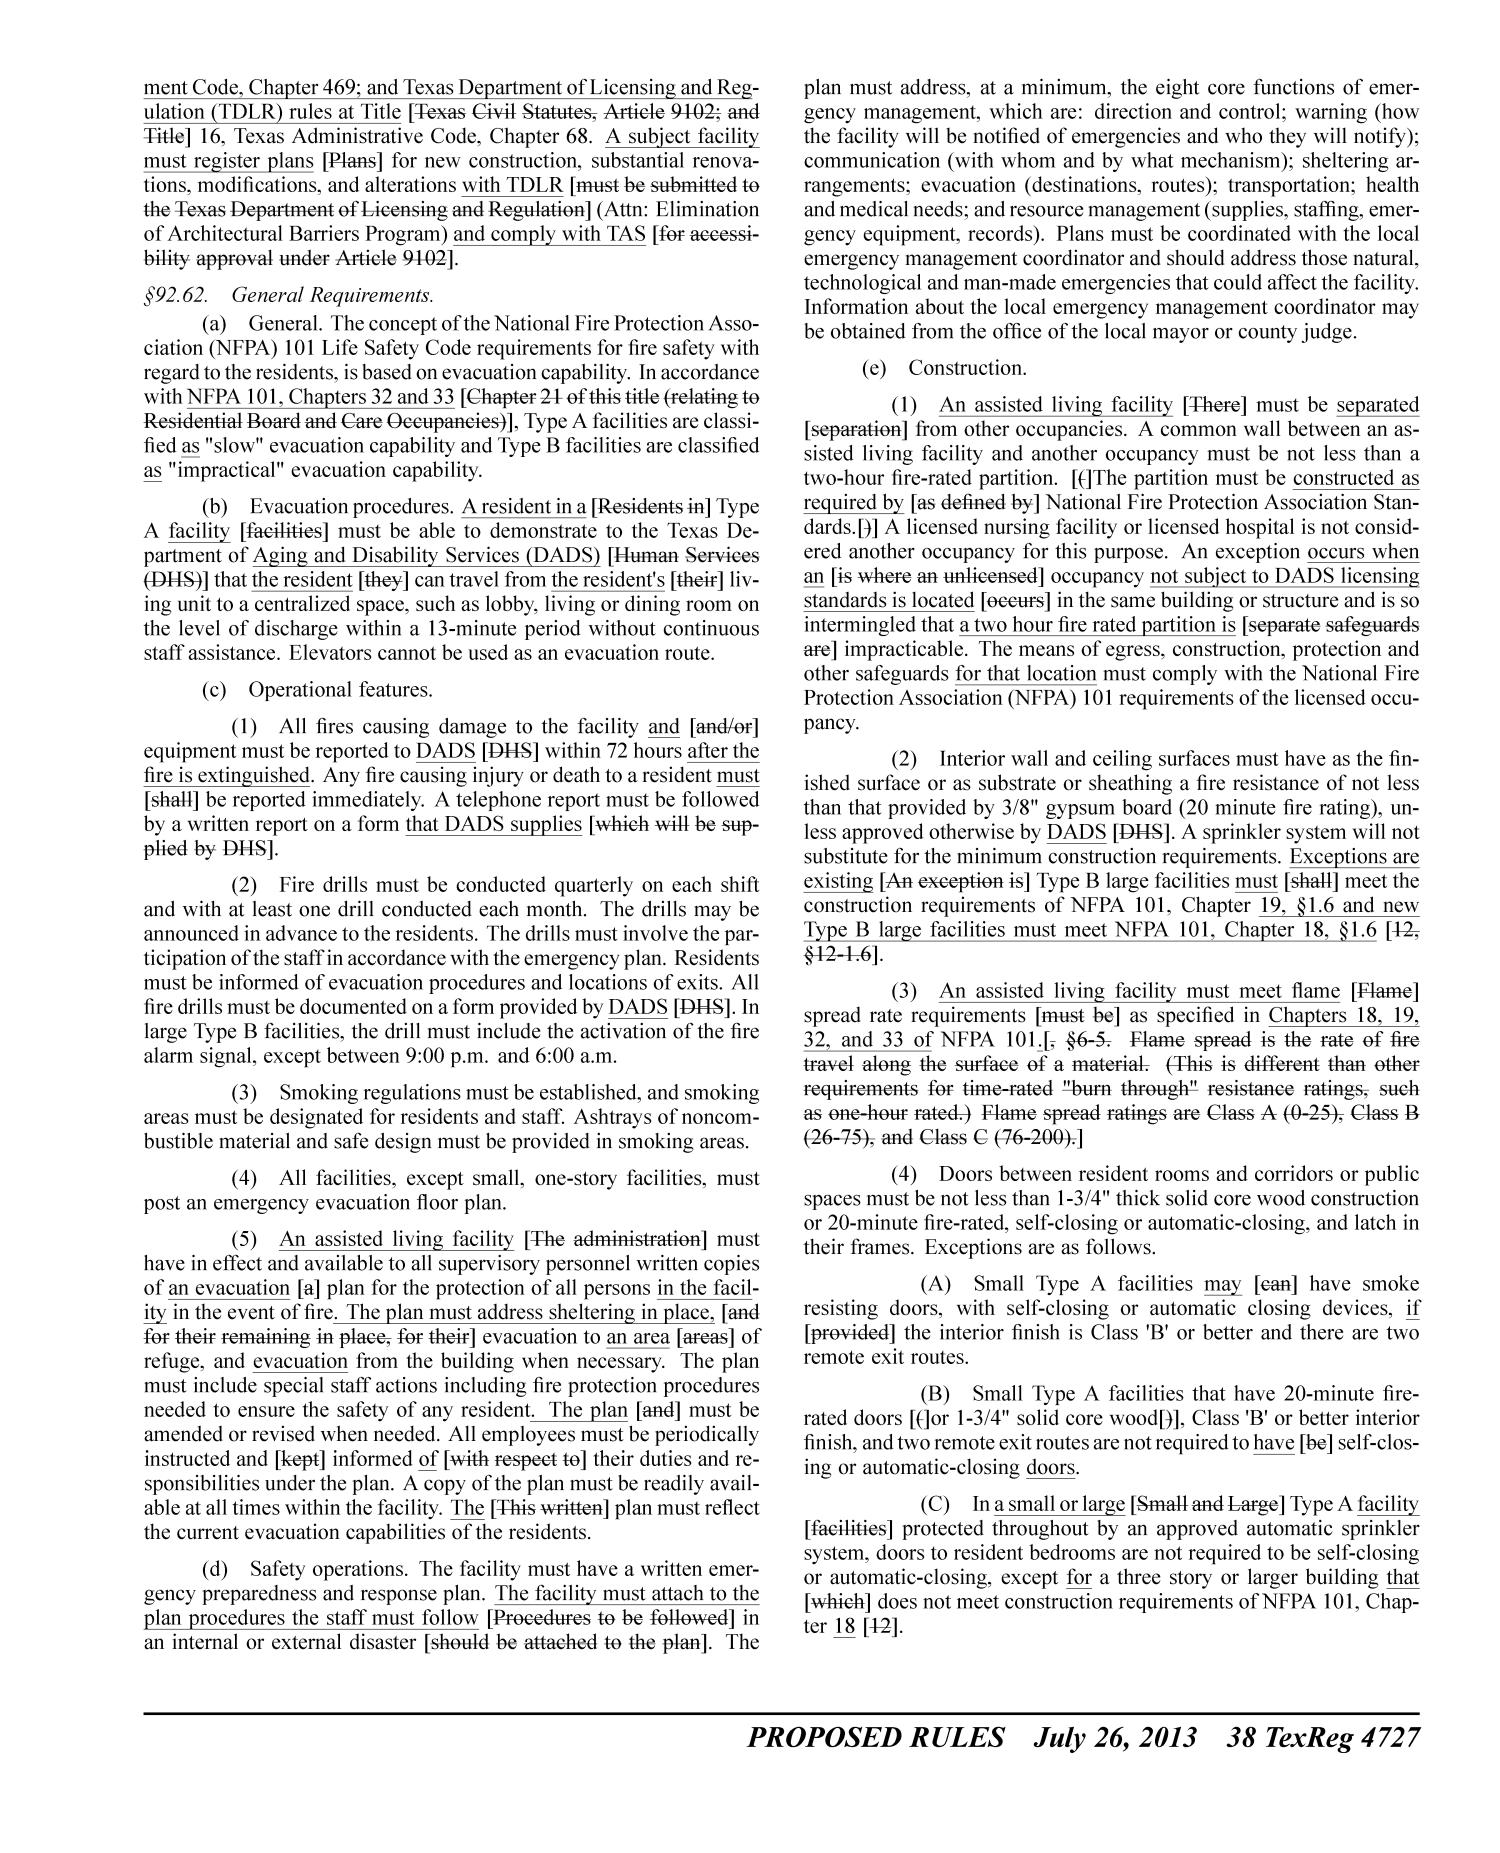 Texas Register, Volume 38, Number 30, Pages 4691-4820, July 26, 2013
                                                
                                                    4727
                                                